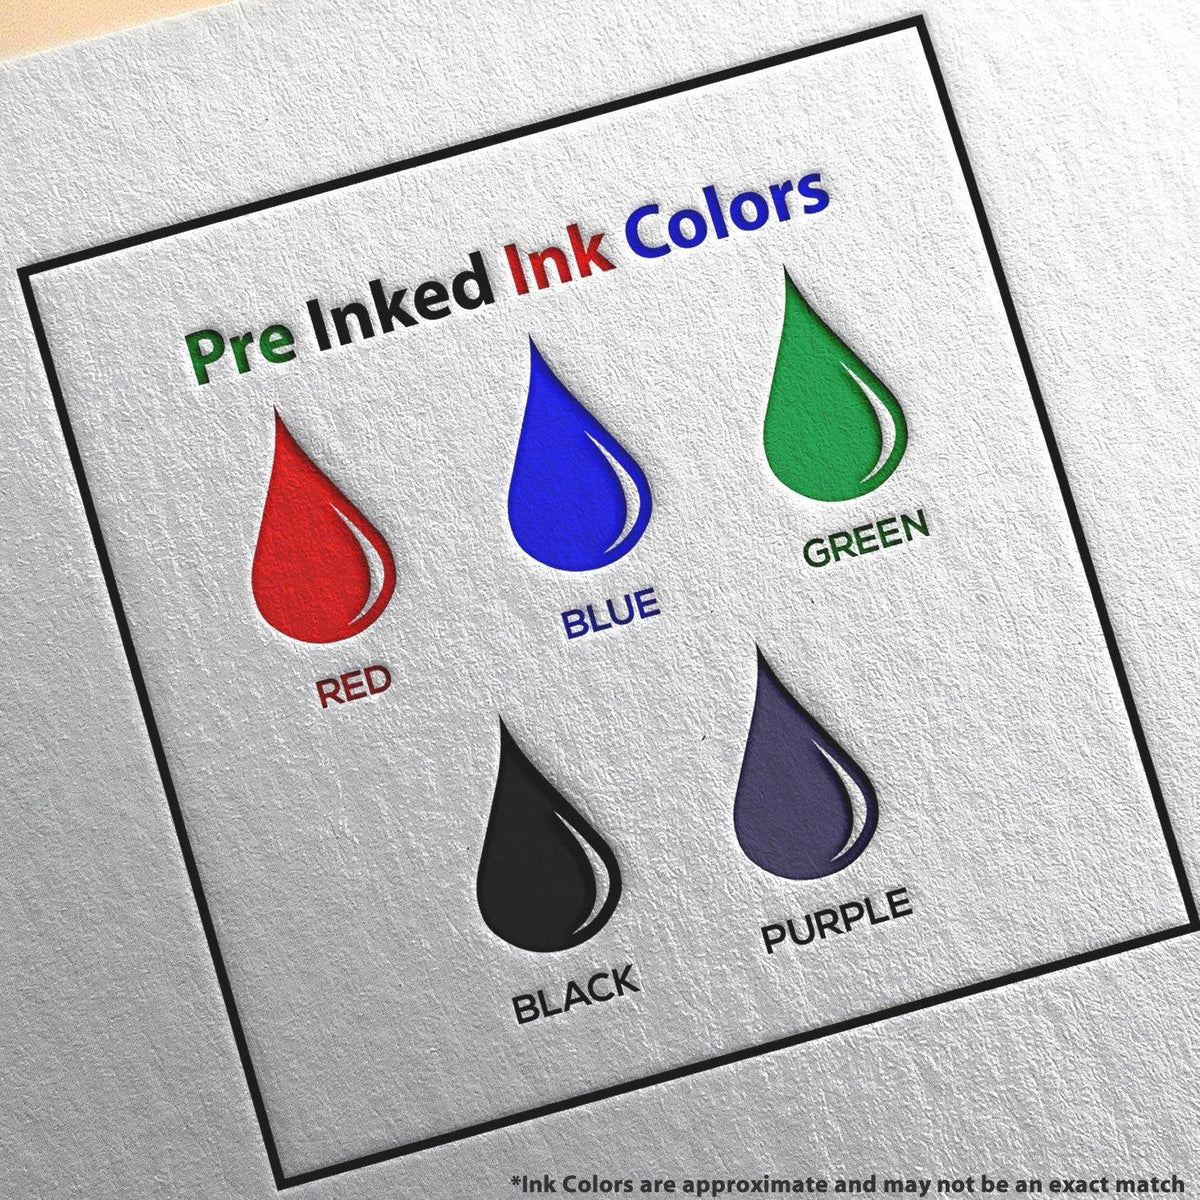 Slim Pre Inked Validate Only Stamp Ink Color Options